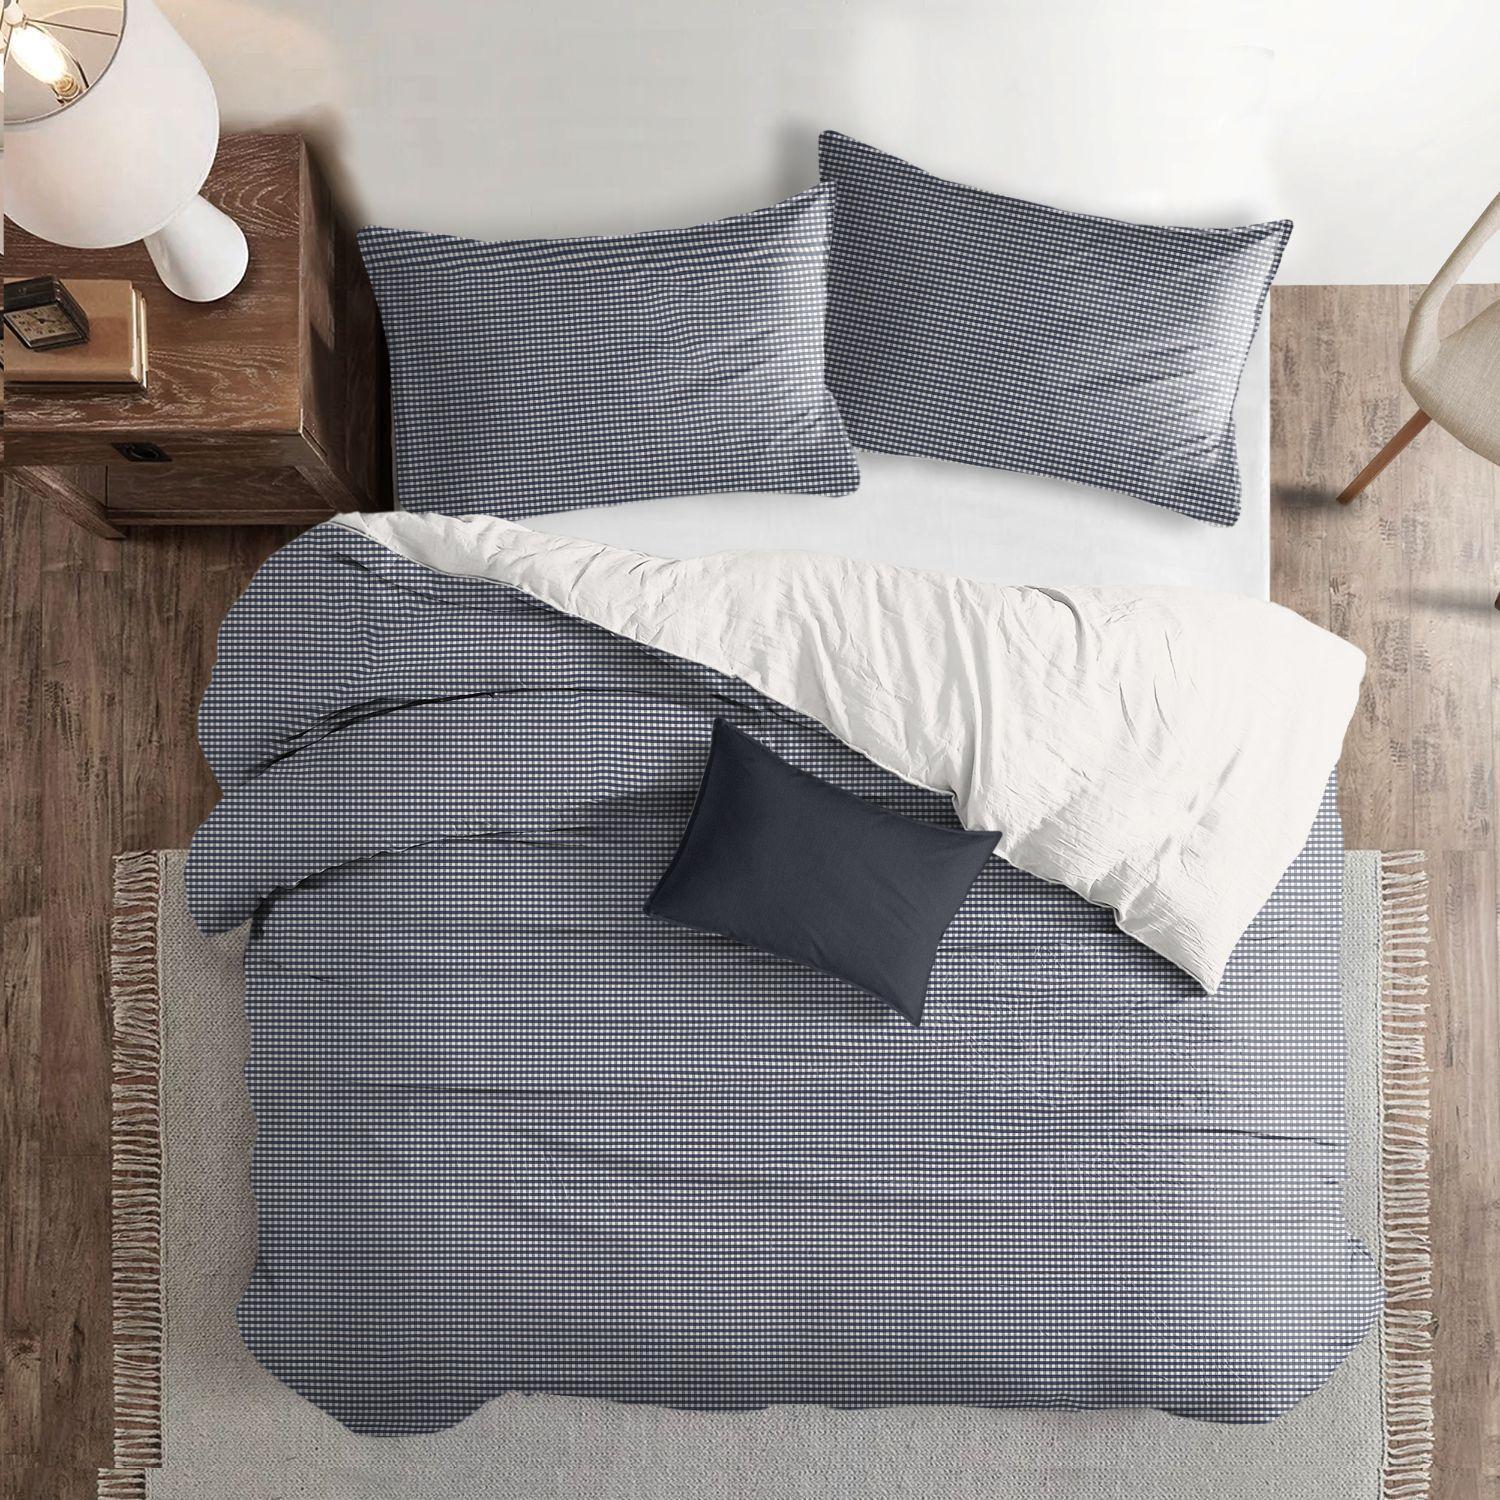 Set of 3 Indigo Blue and White Checkered Comforter with Pillow Shams - King alternate image